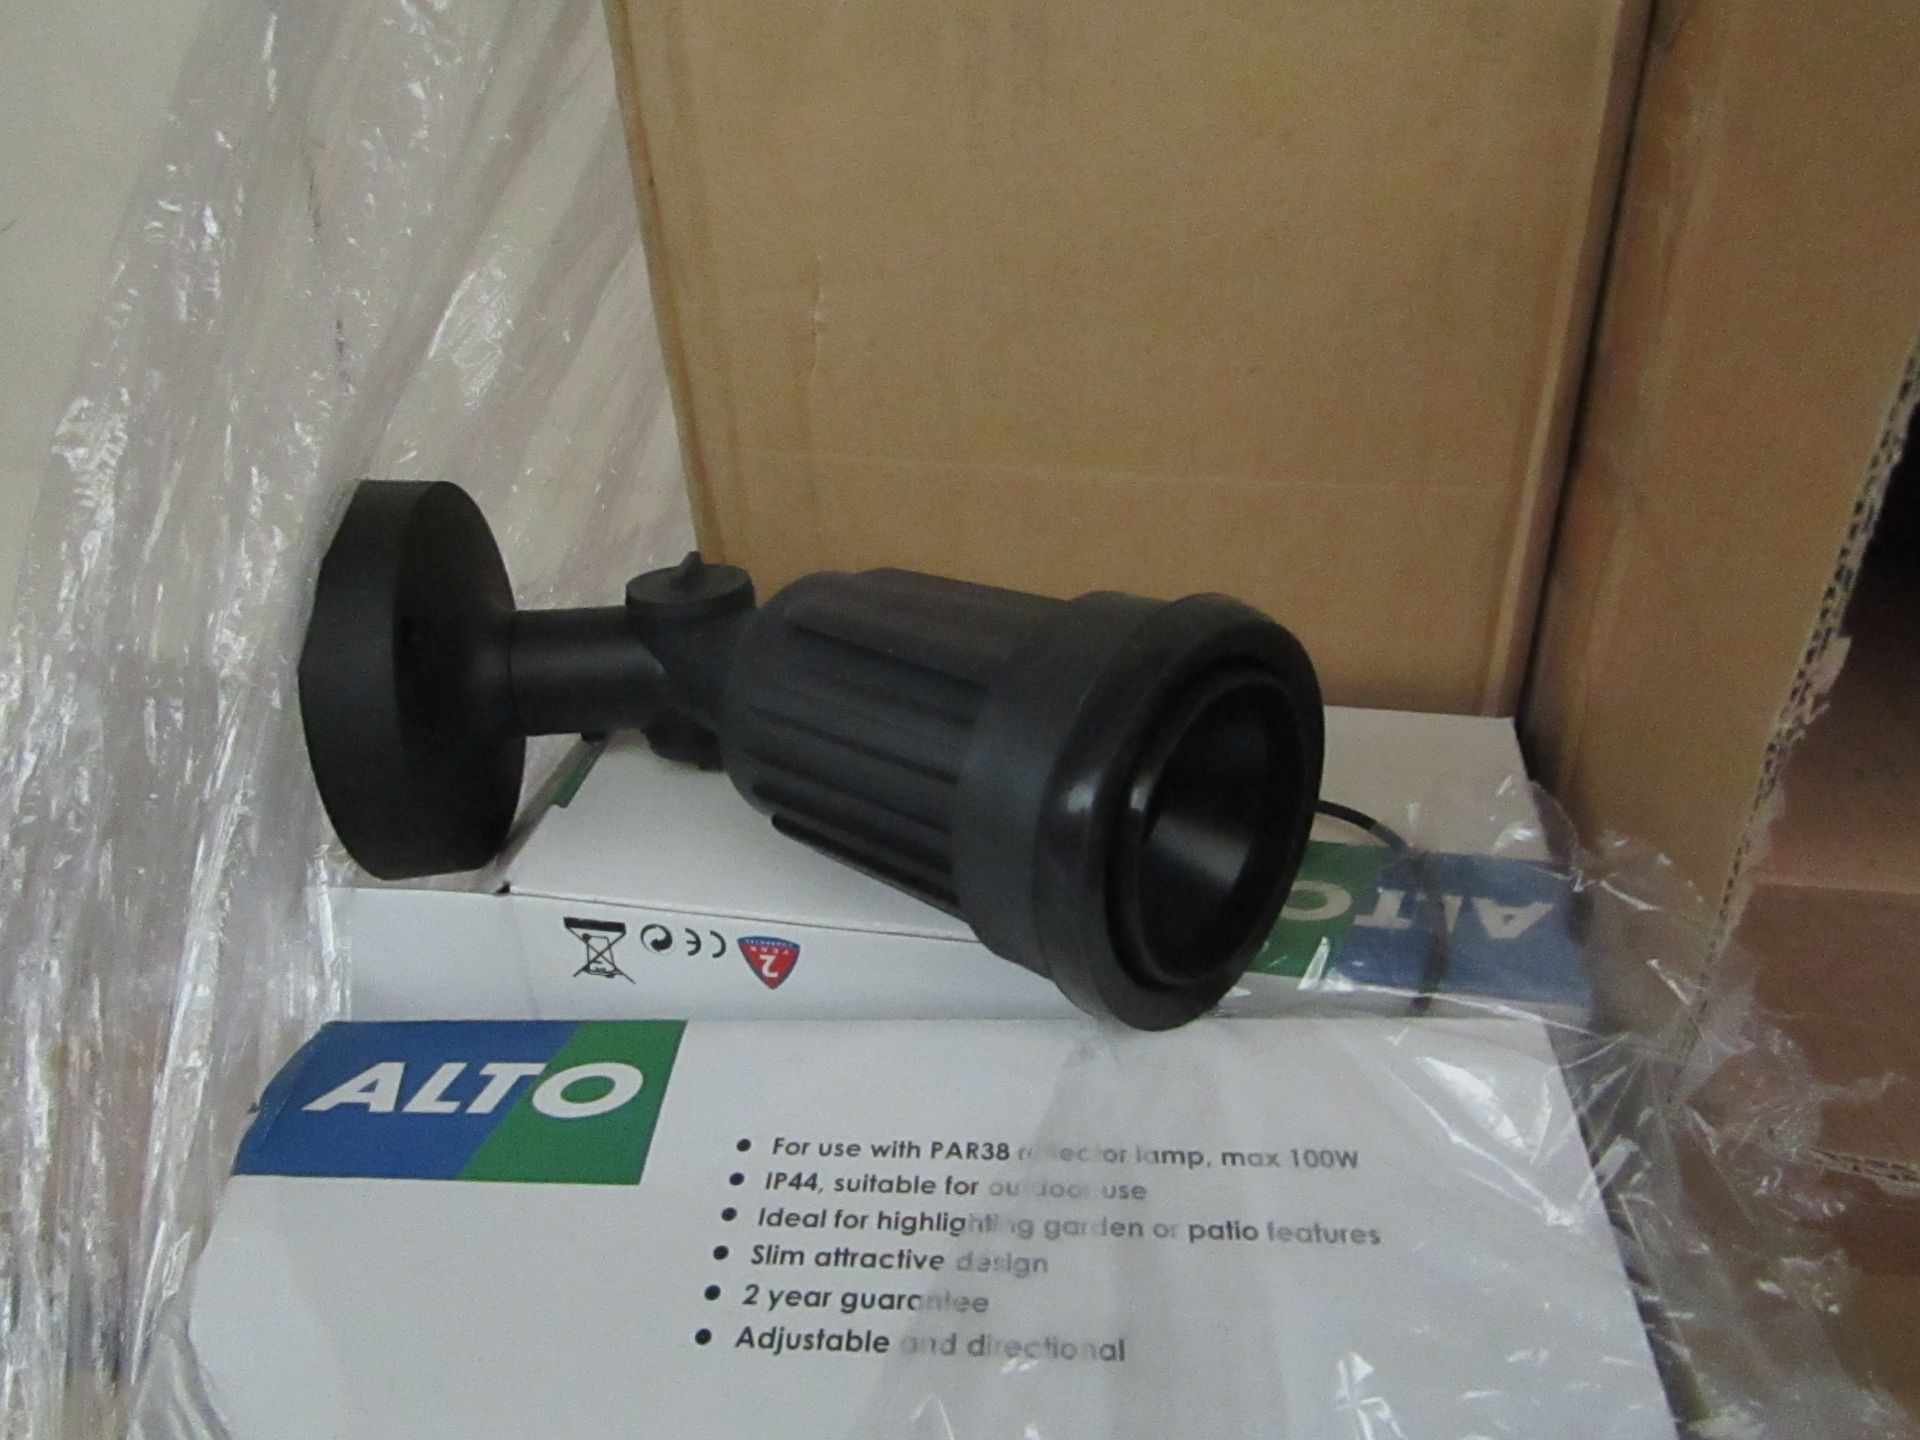 4x Alto - Outdoor IP44 Wall mounted Spot Light Suitable for Highlighting  Garden, Patio, etc